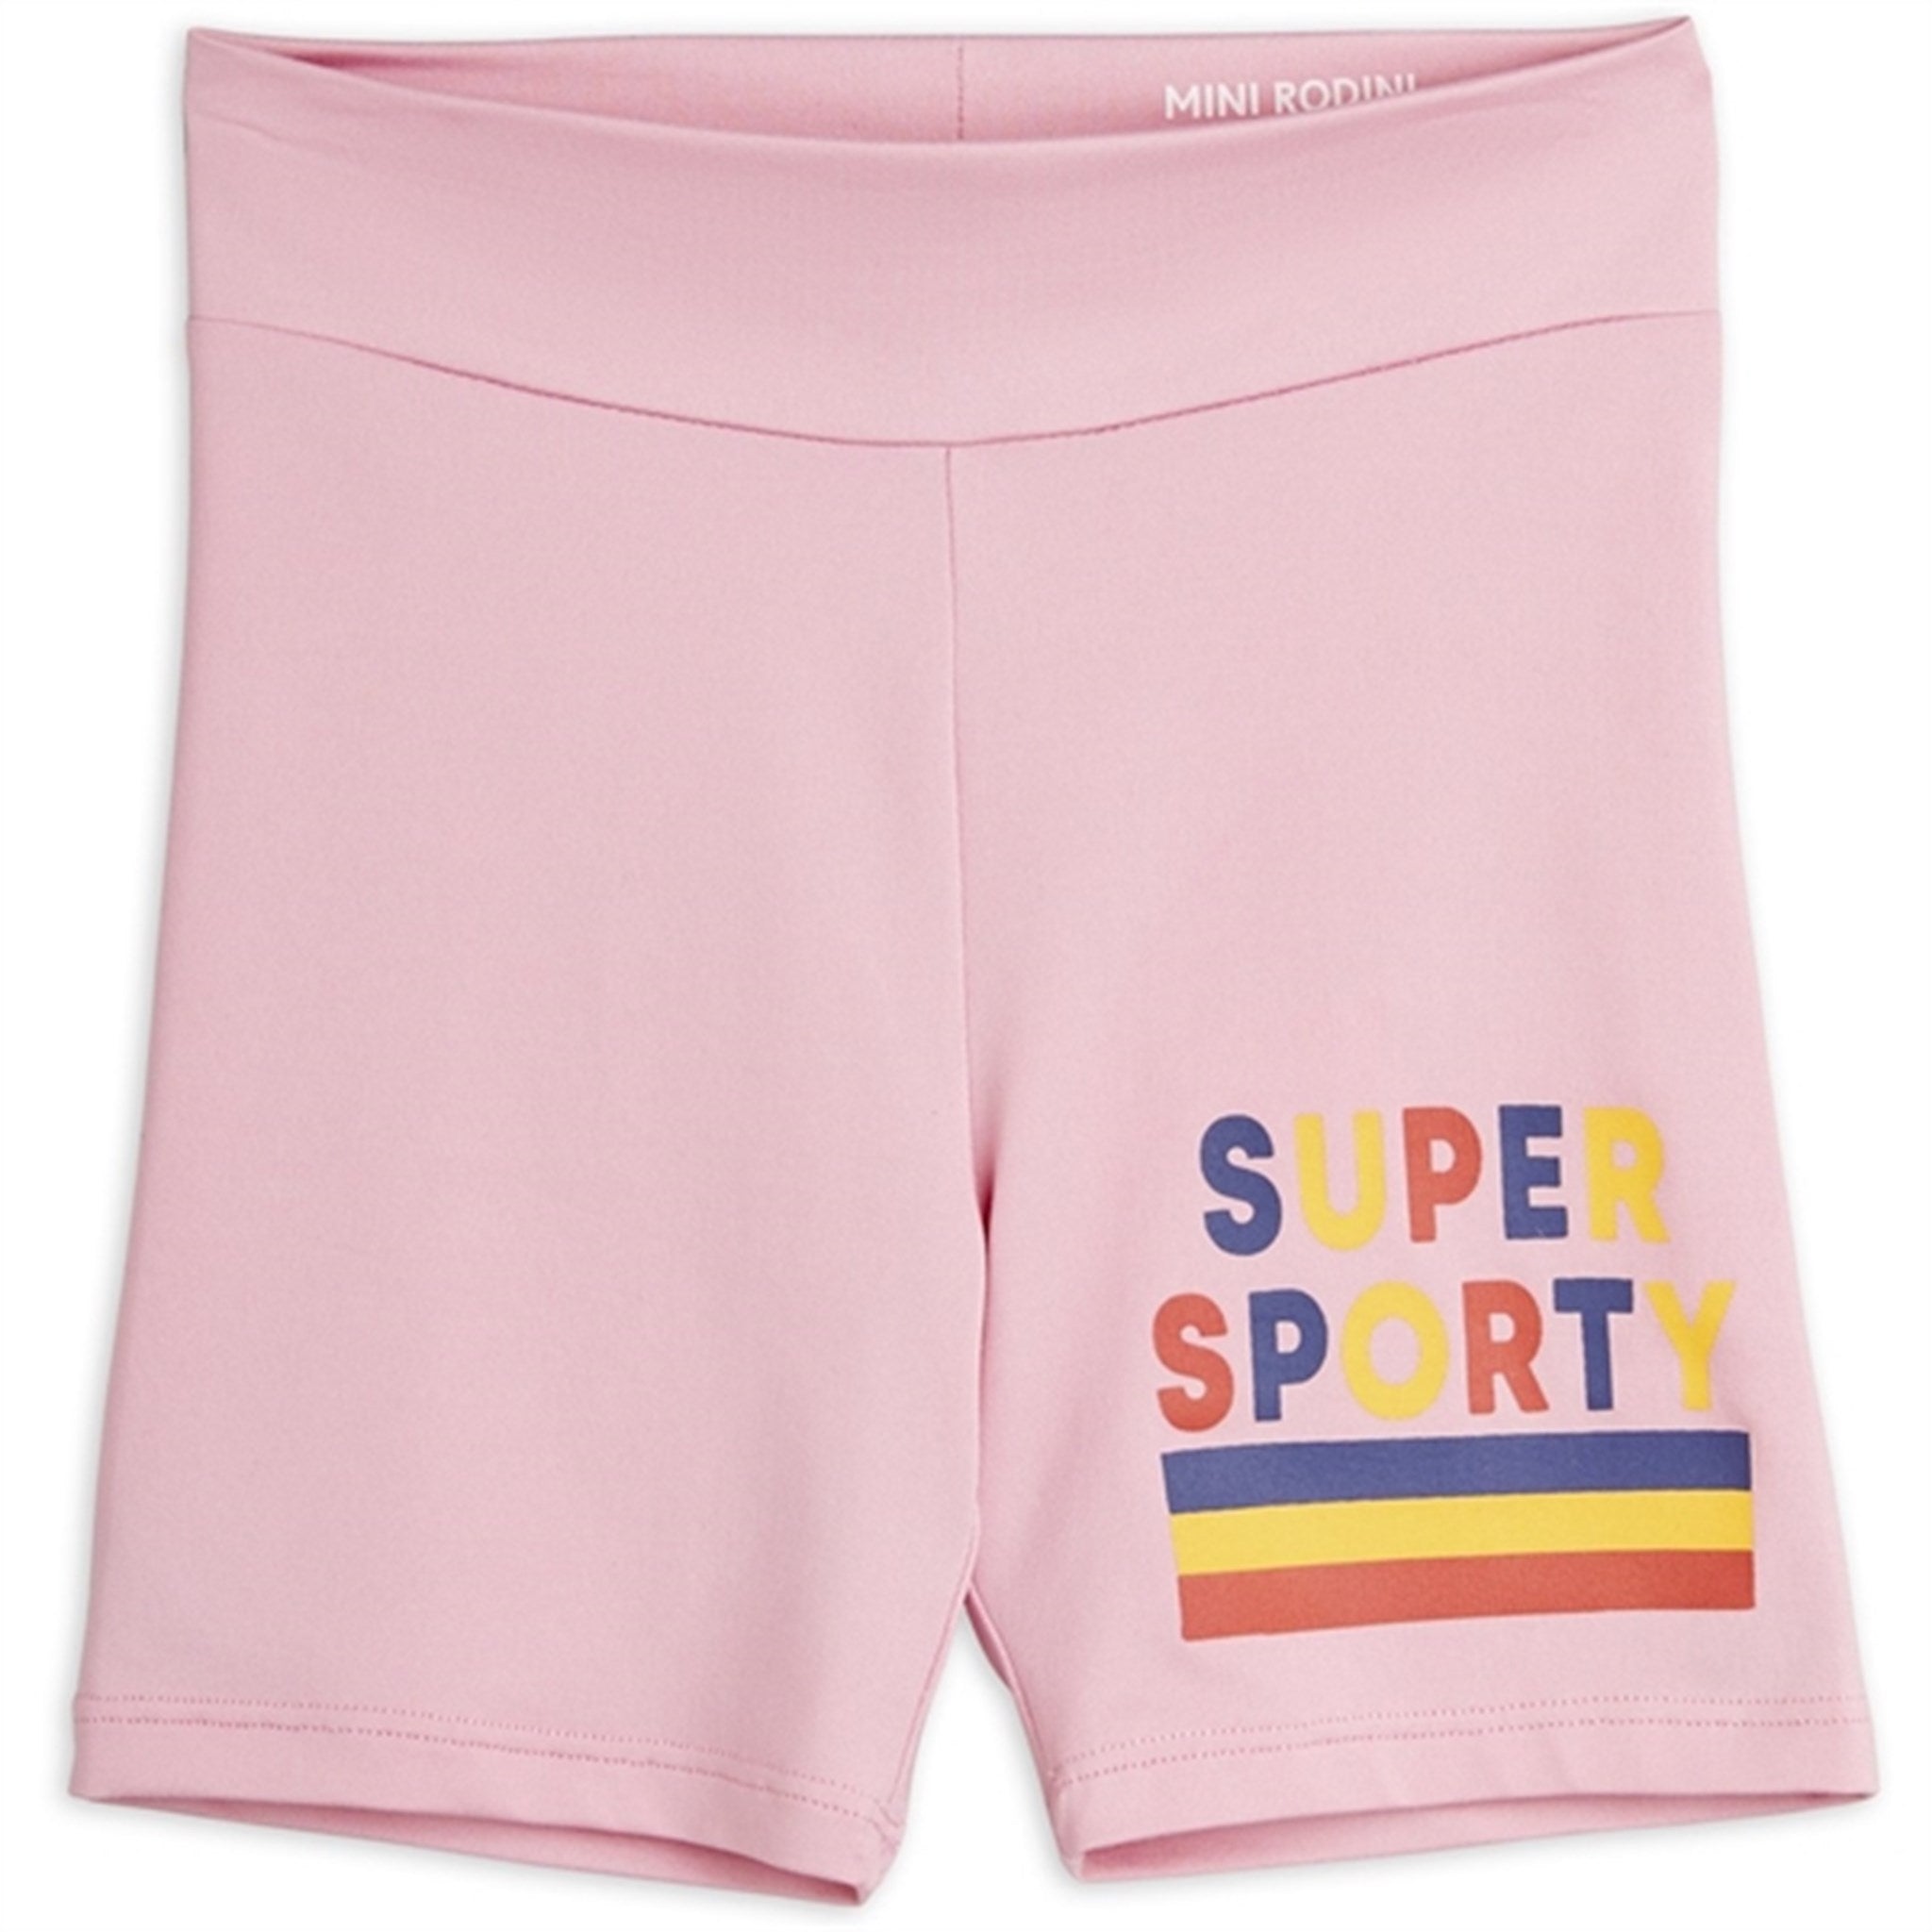 Mini Rodini Pink Super Sporty Sp Bike Shorts